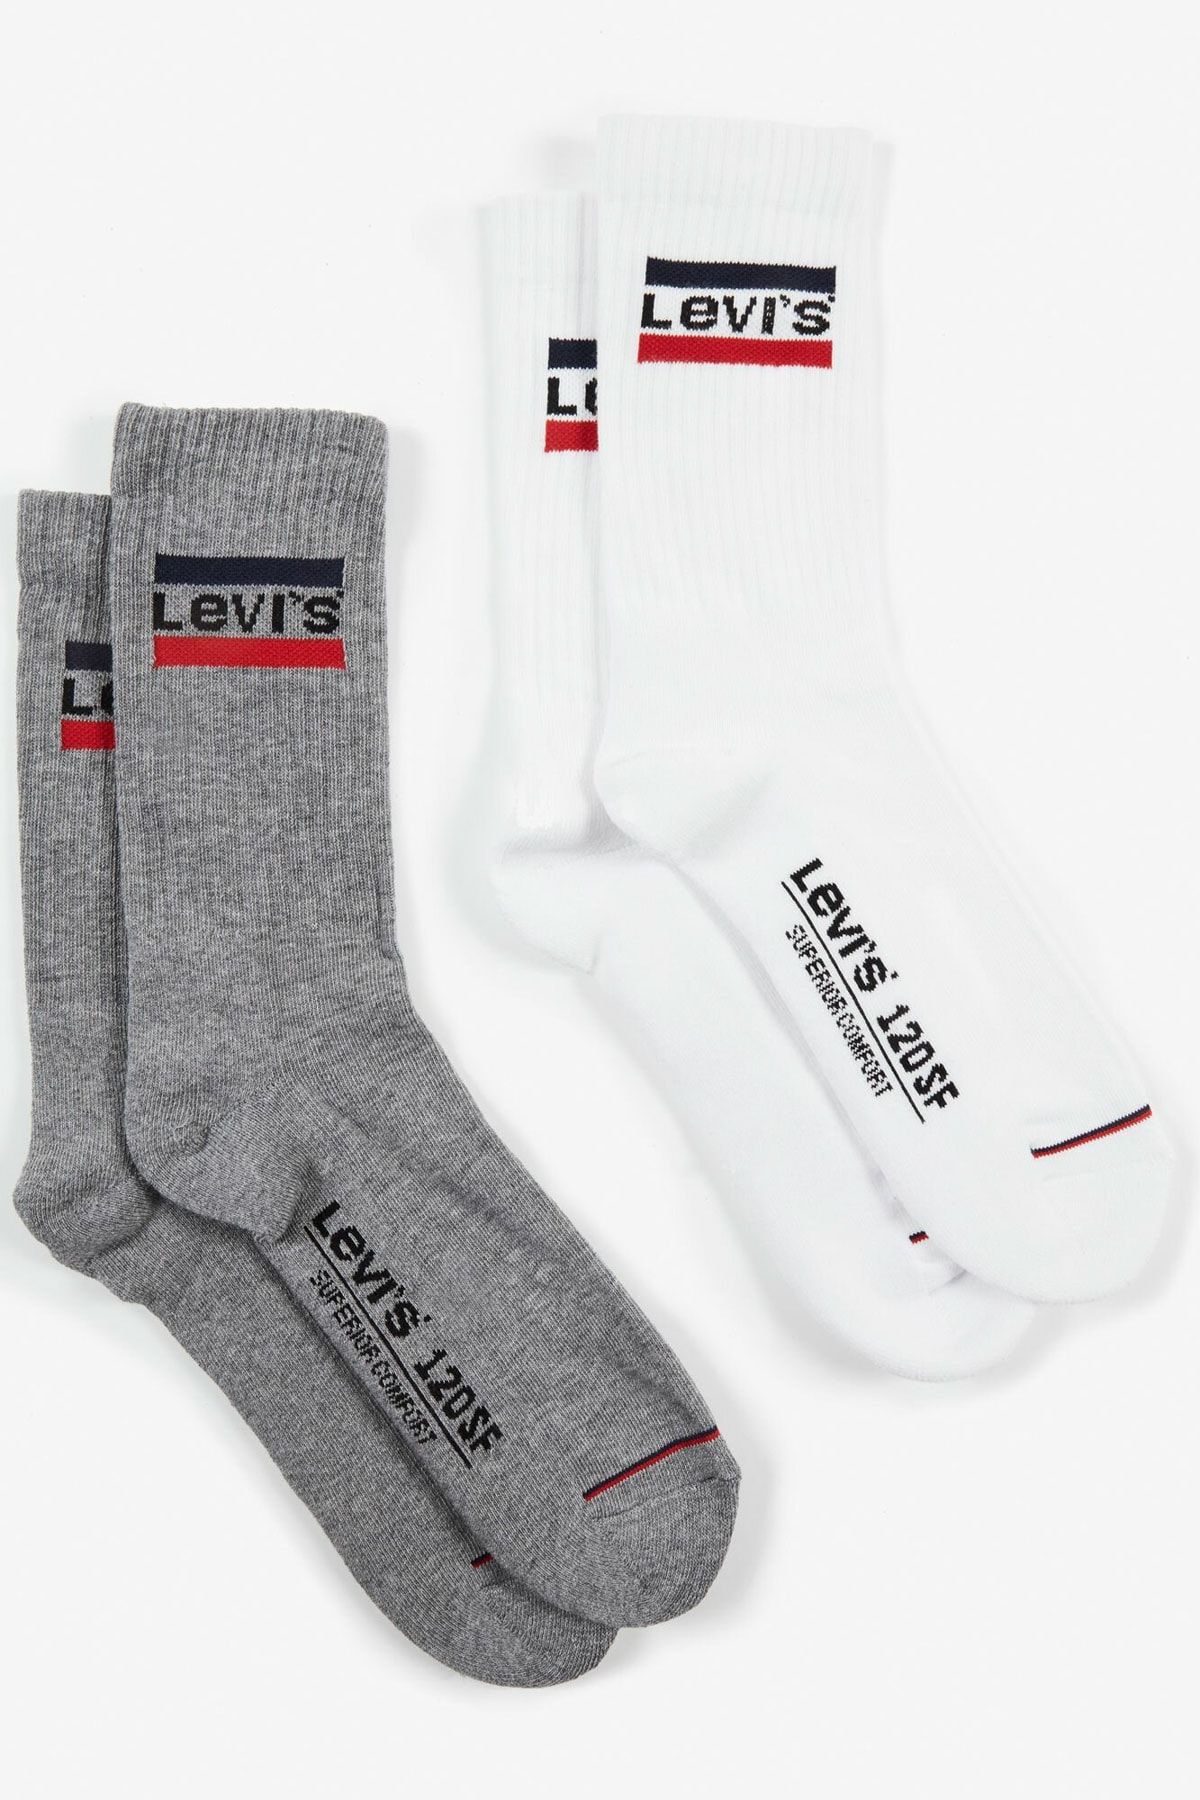 Levi's Levis Erkek Çorap 37483-0056